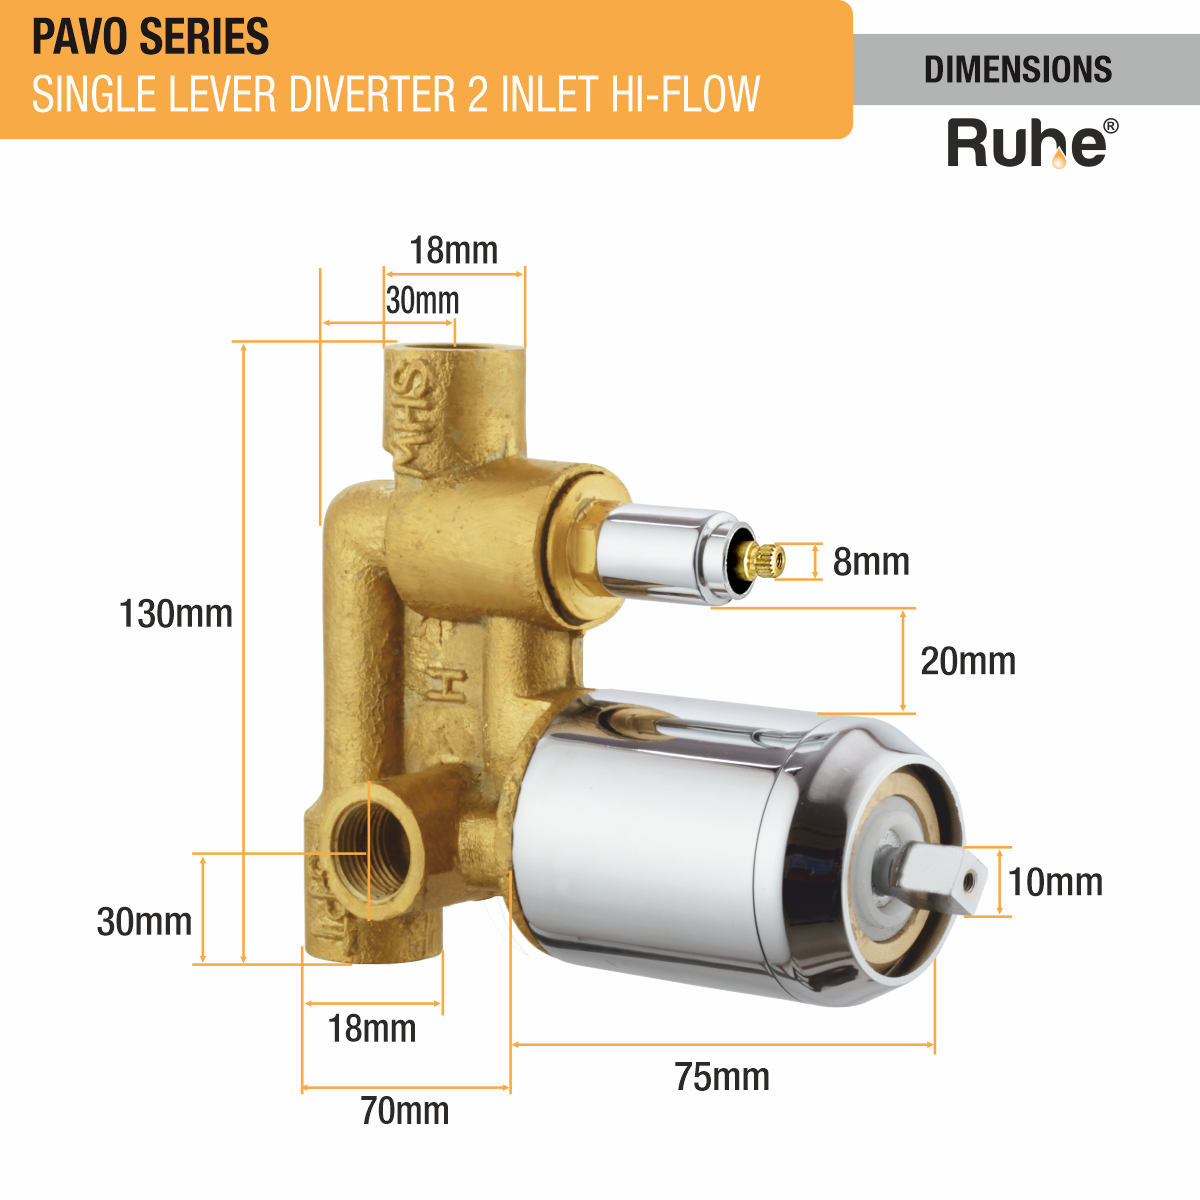 Pavo Single Lever 2-inlet Hi-Flow Diverter (Complete Set) dimensions and size